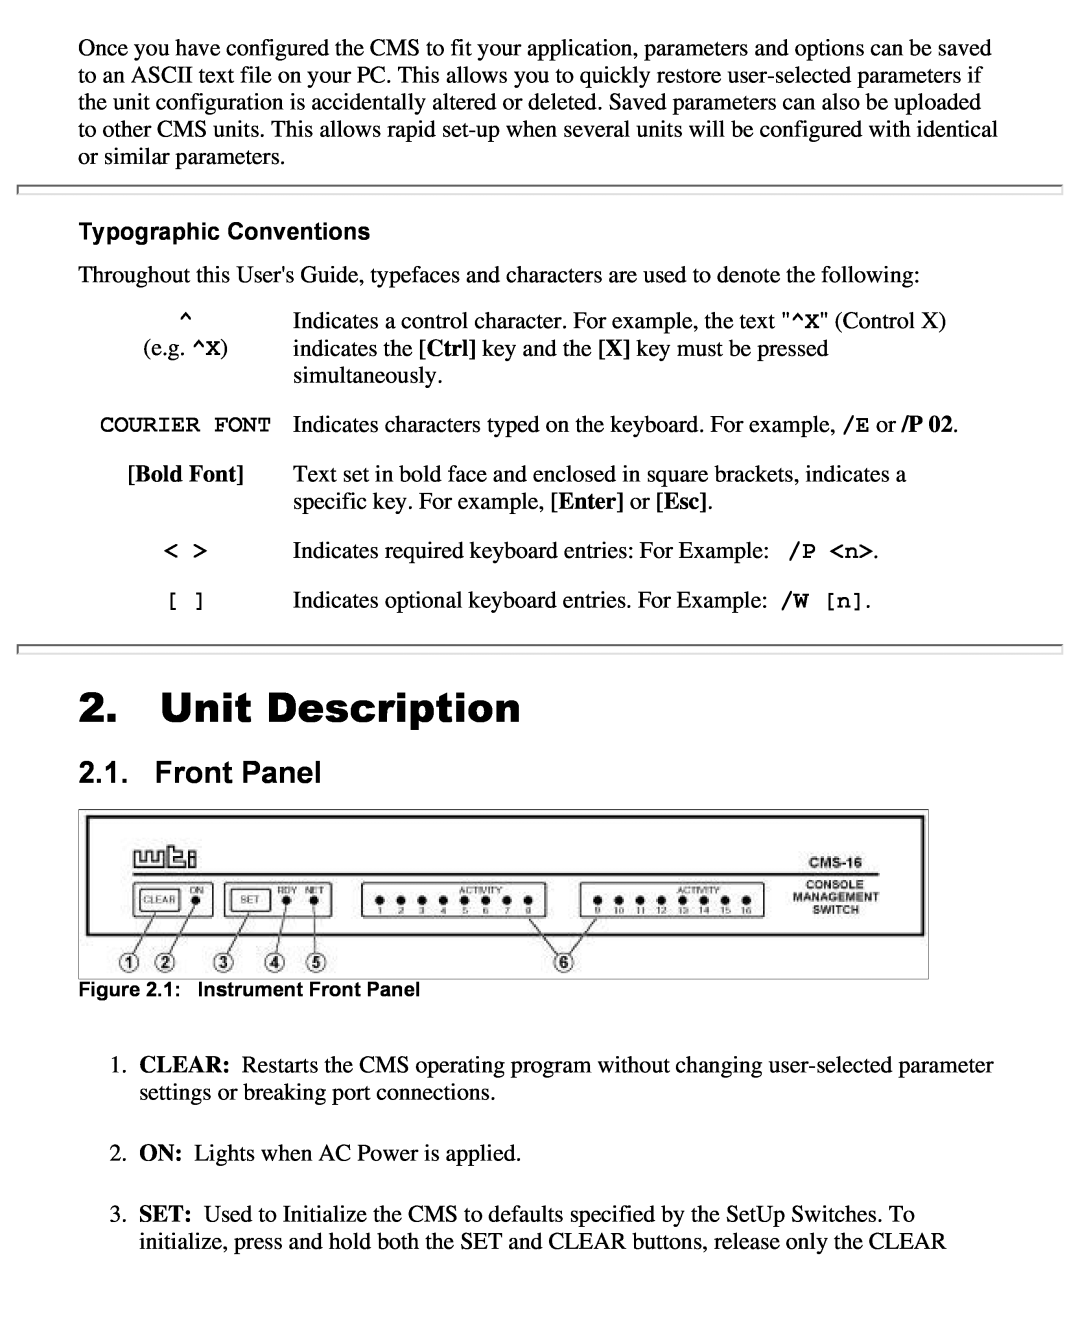 Western Telematic CMS-16 manual Unit Description, Front Panel, Typographic Conventions, Courier Font 